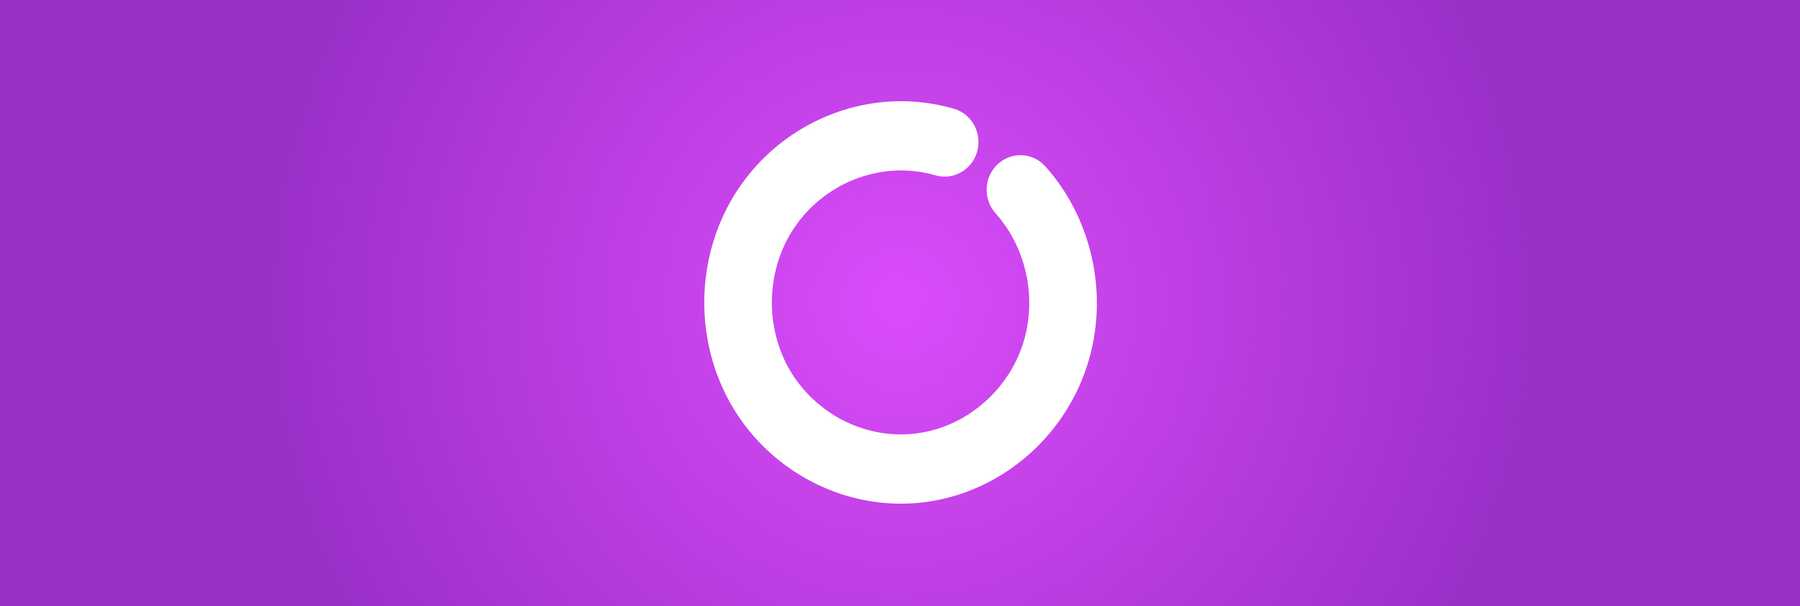 White circular Neon logo on purple background